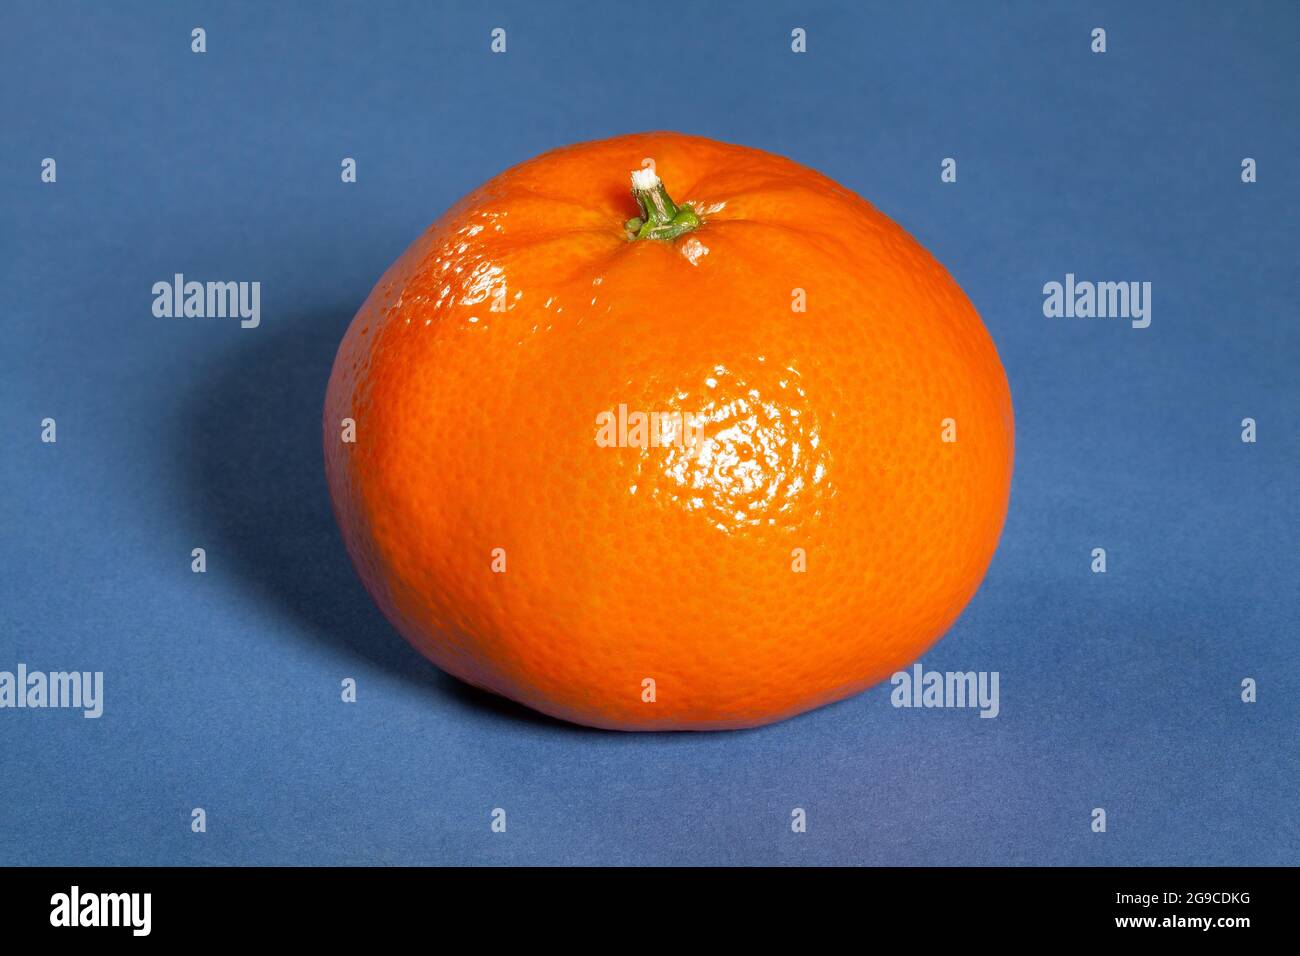 single tangerine on blue background Stock Photo